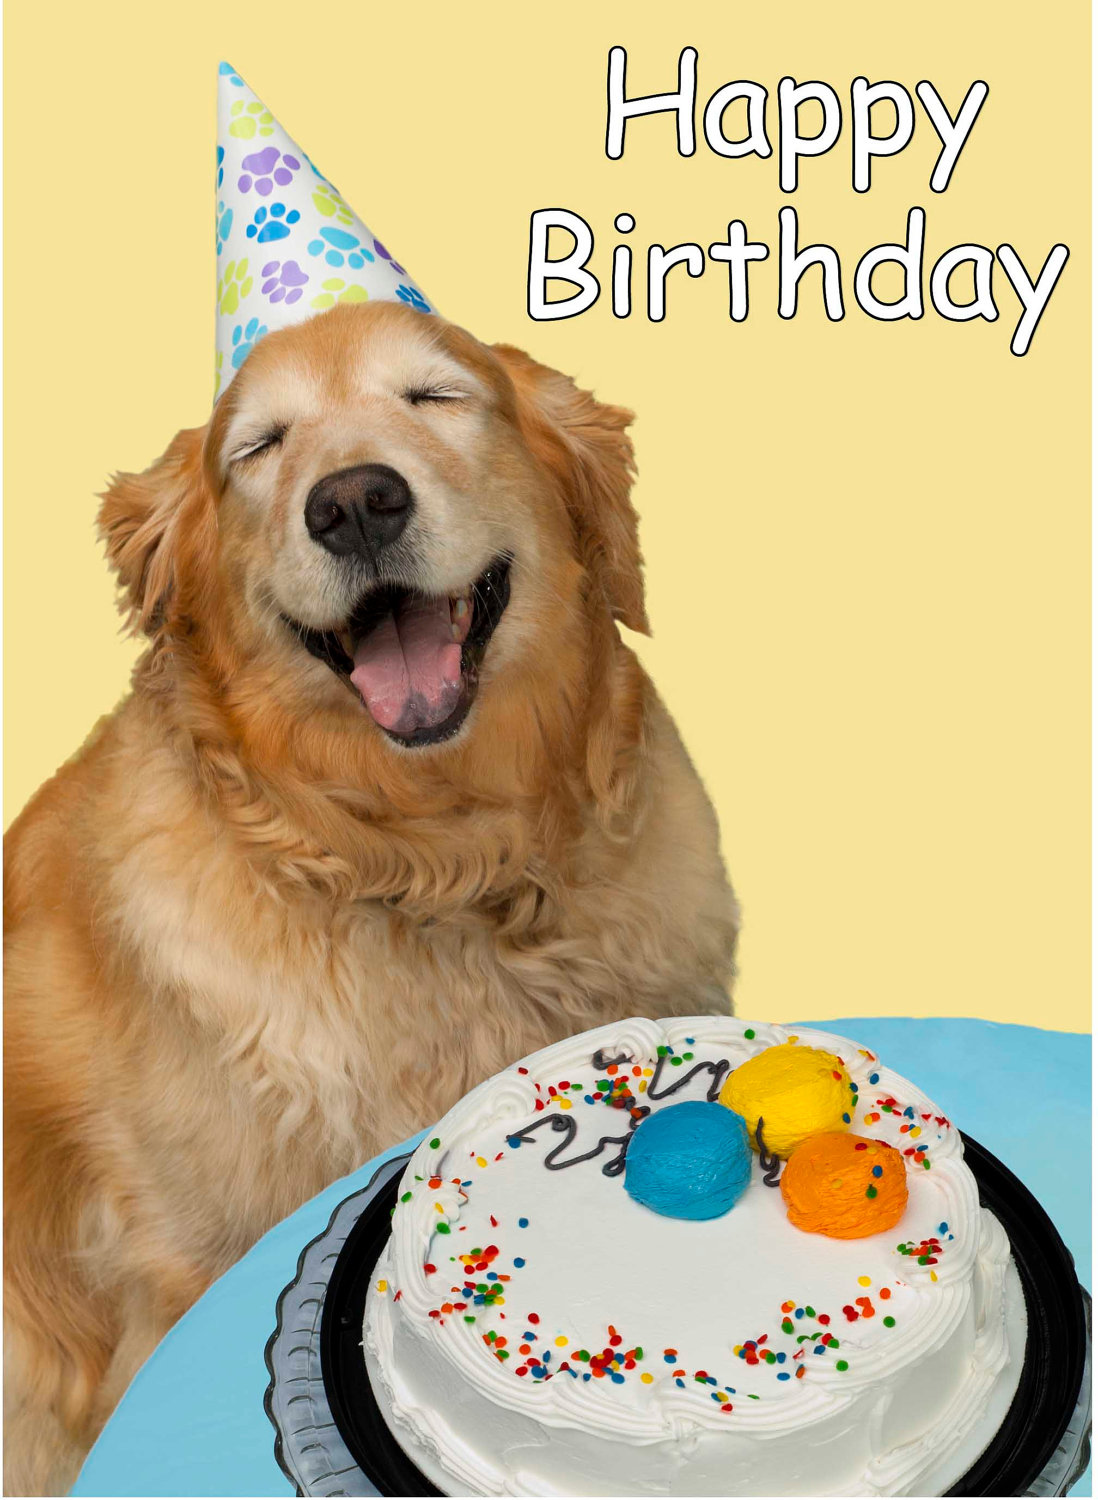 Sweet Dog Wishing Happy Birthday